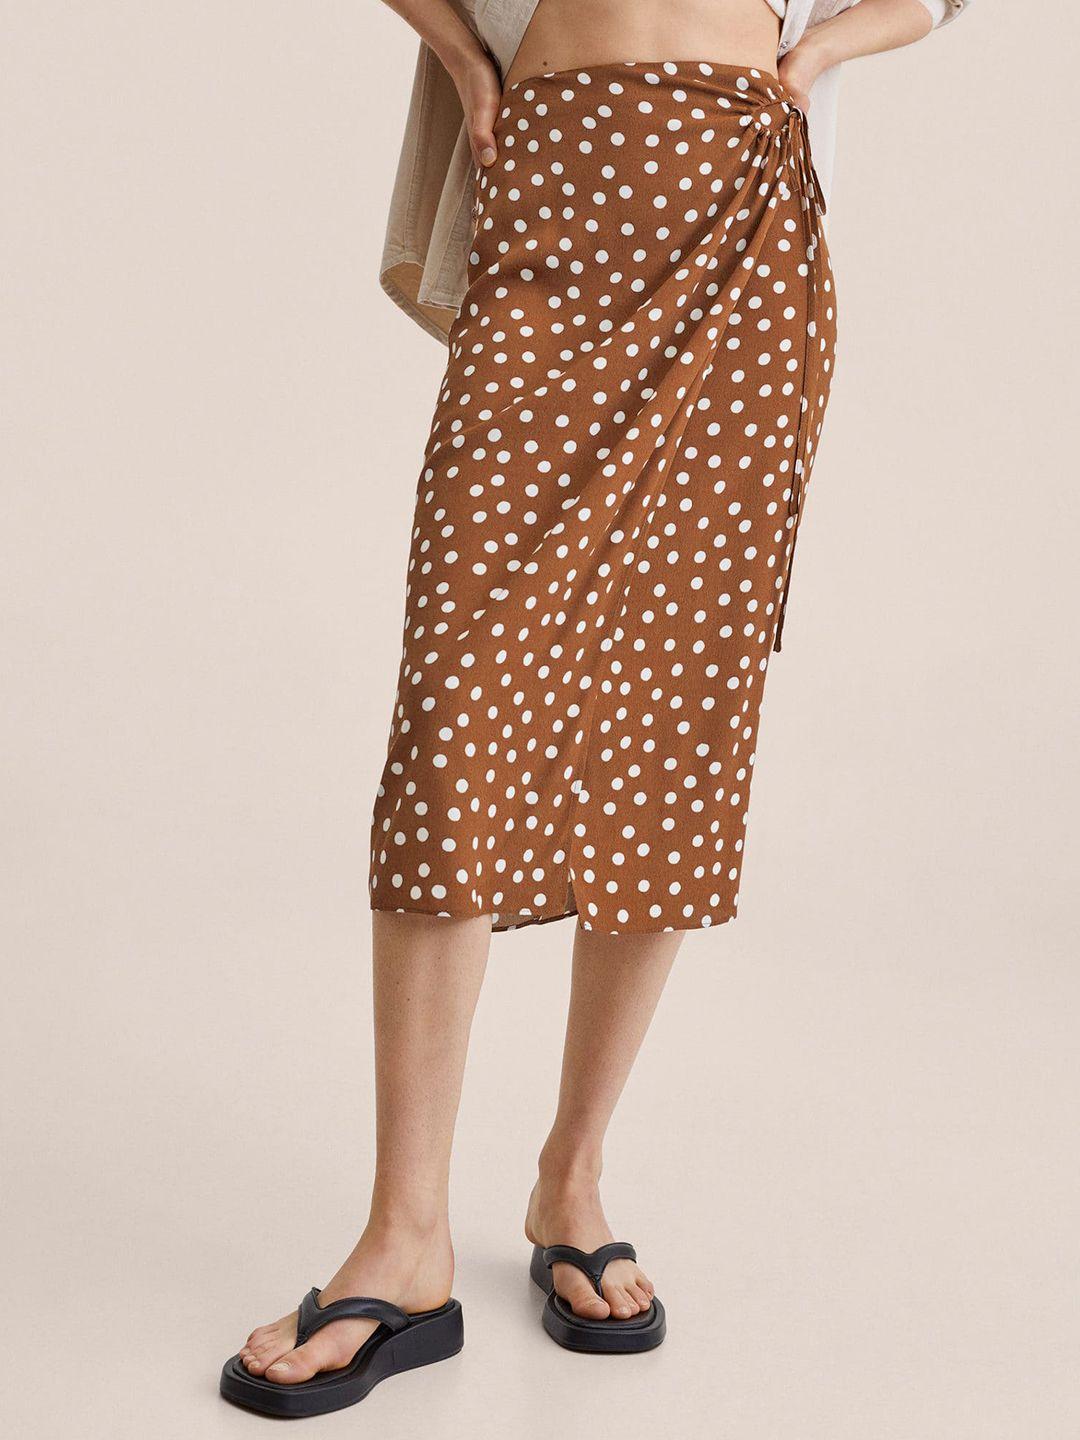 mango women brown and white polka dot printed skirt